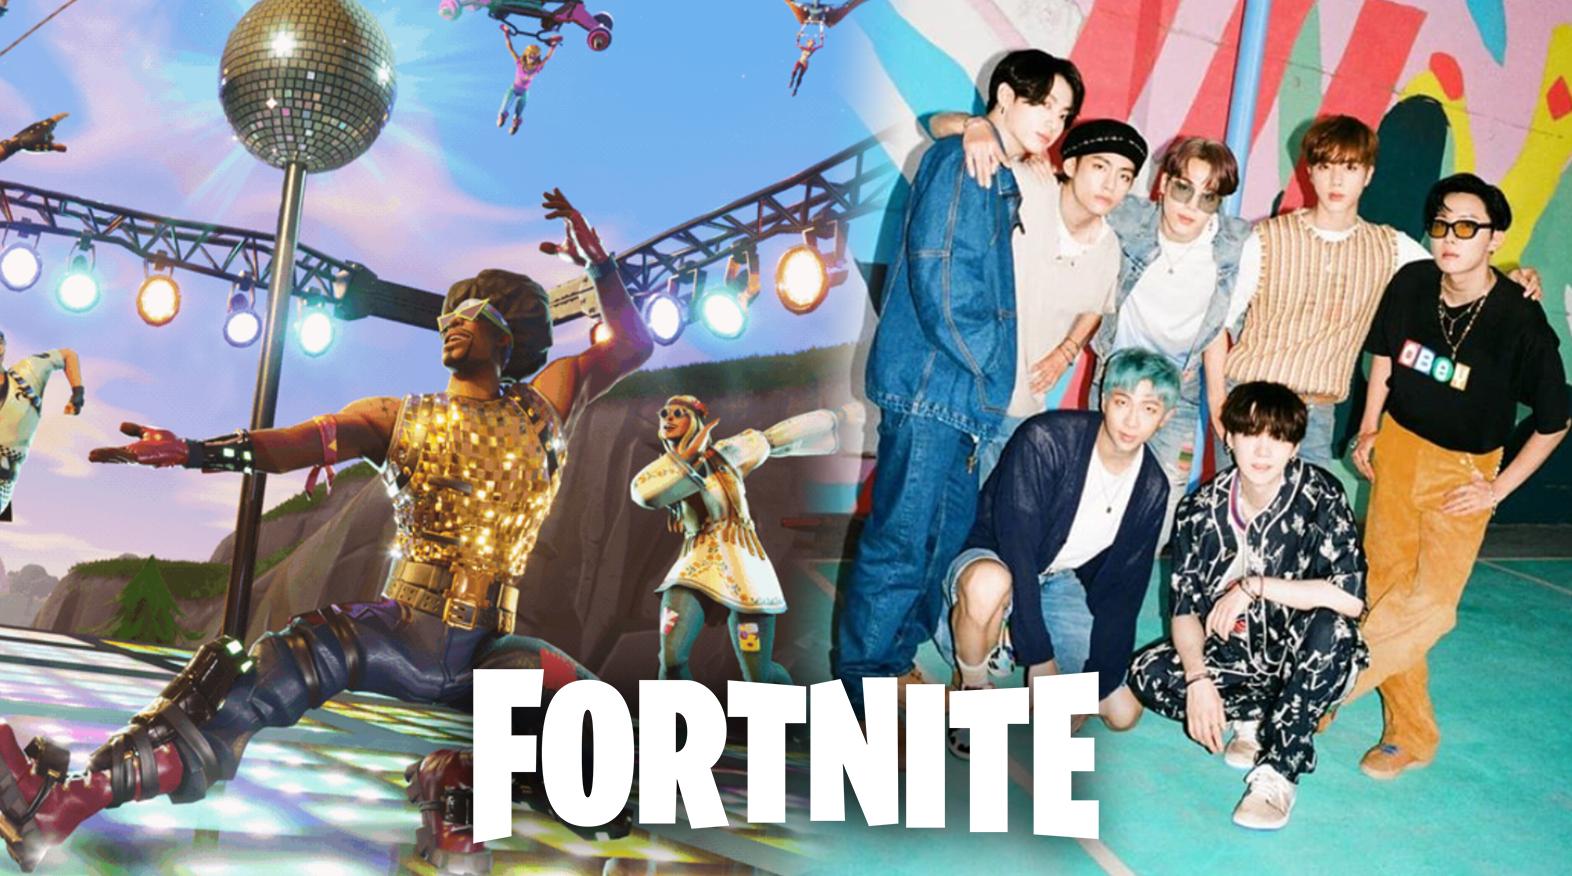 Fortnite gameplay / BTS photoshoot